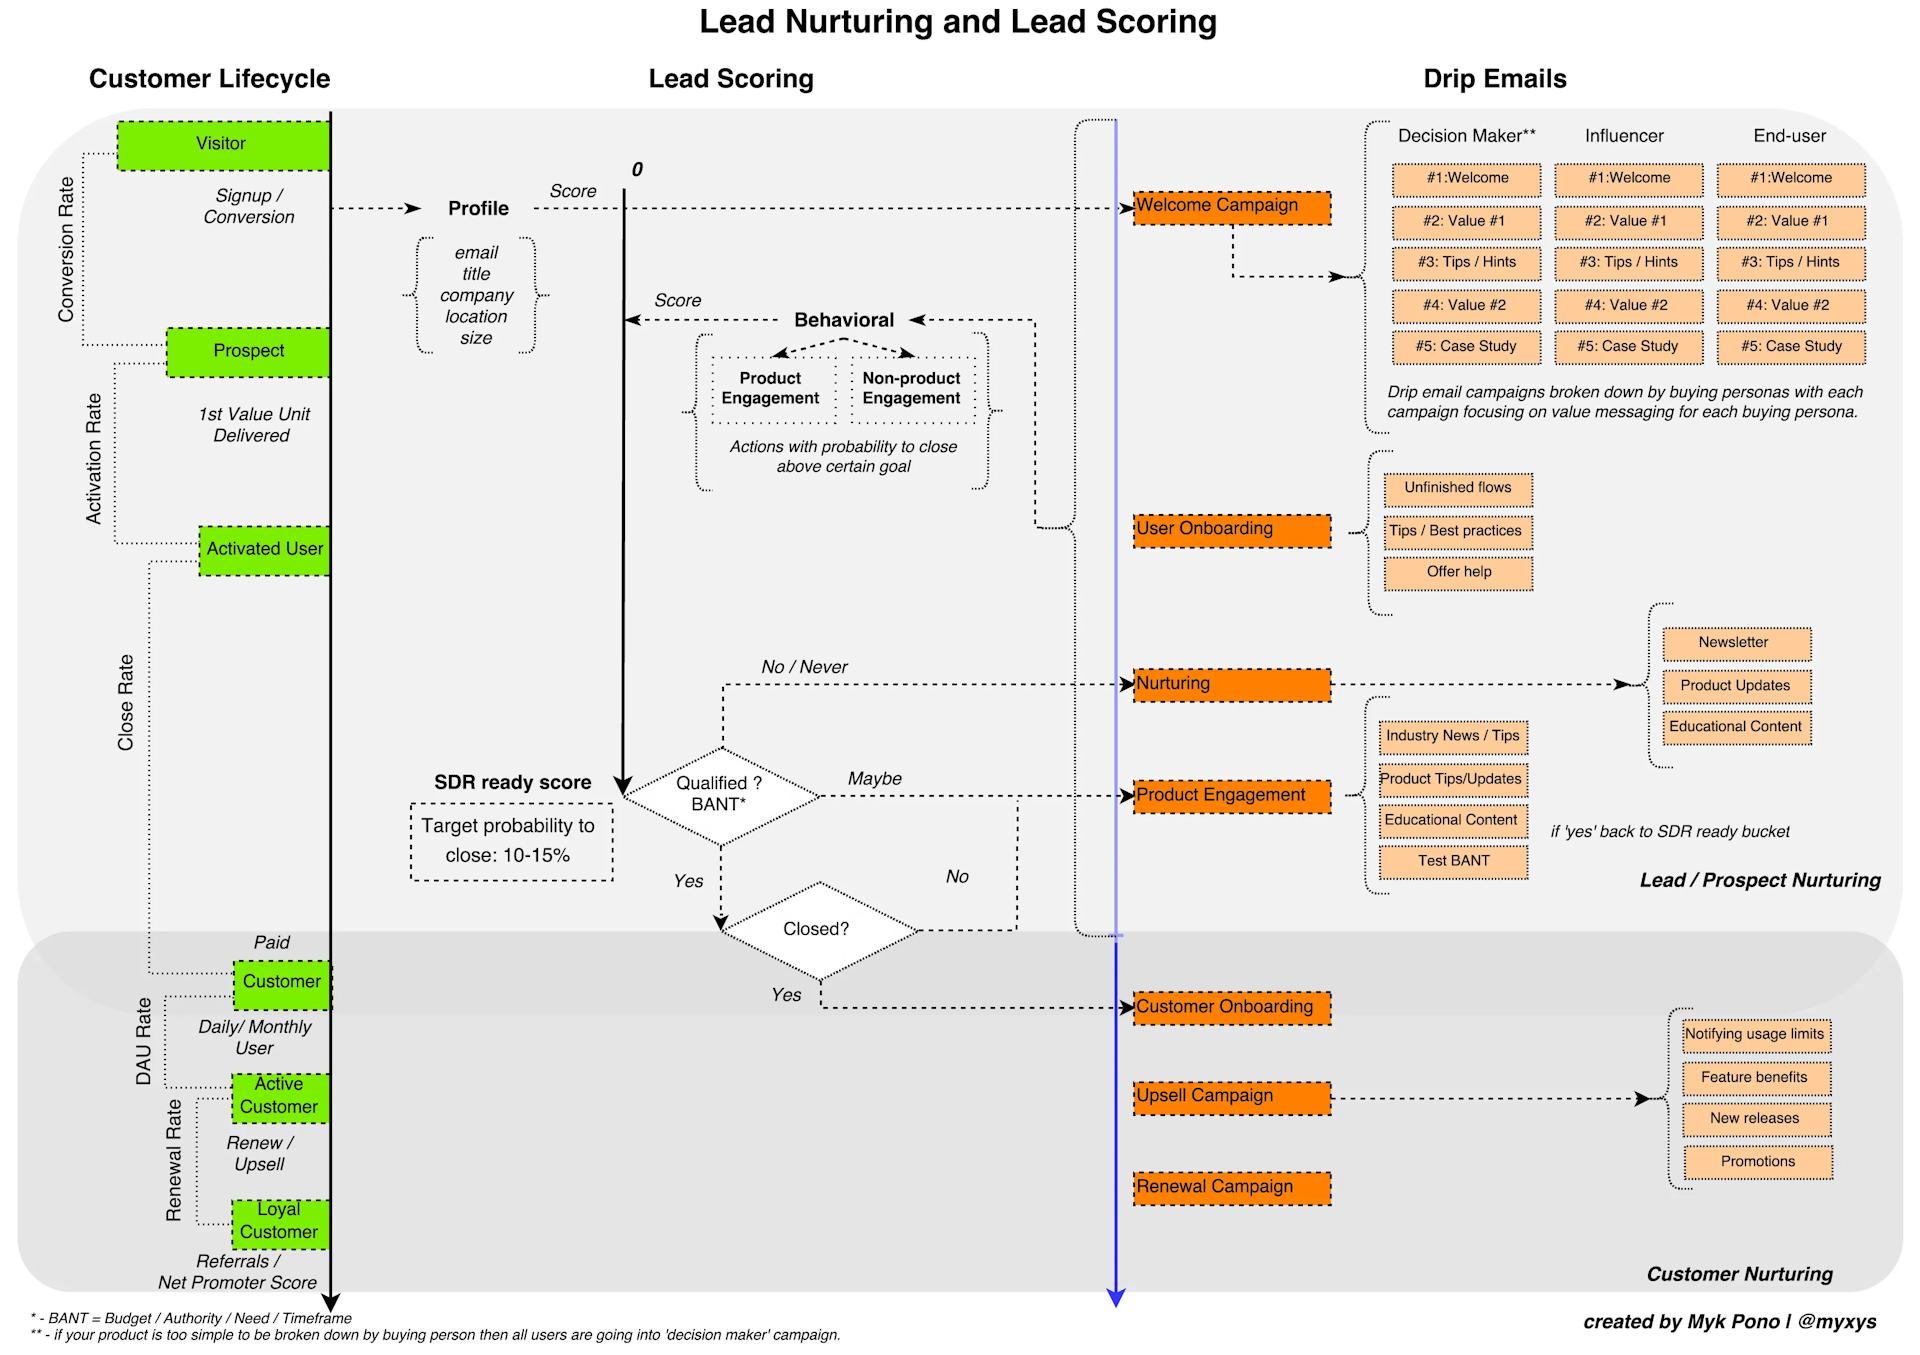 Lead Nurturing and Lead Scoring